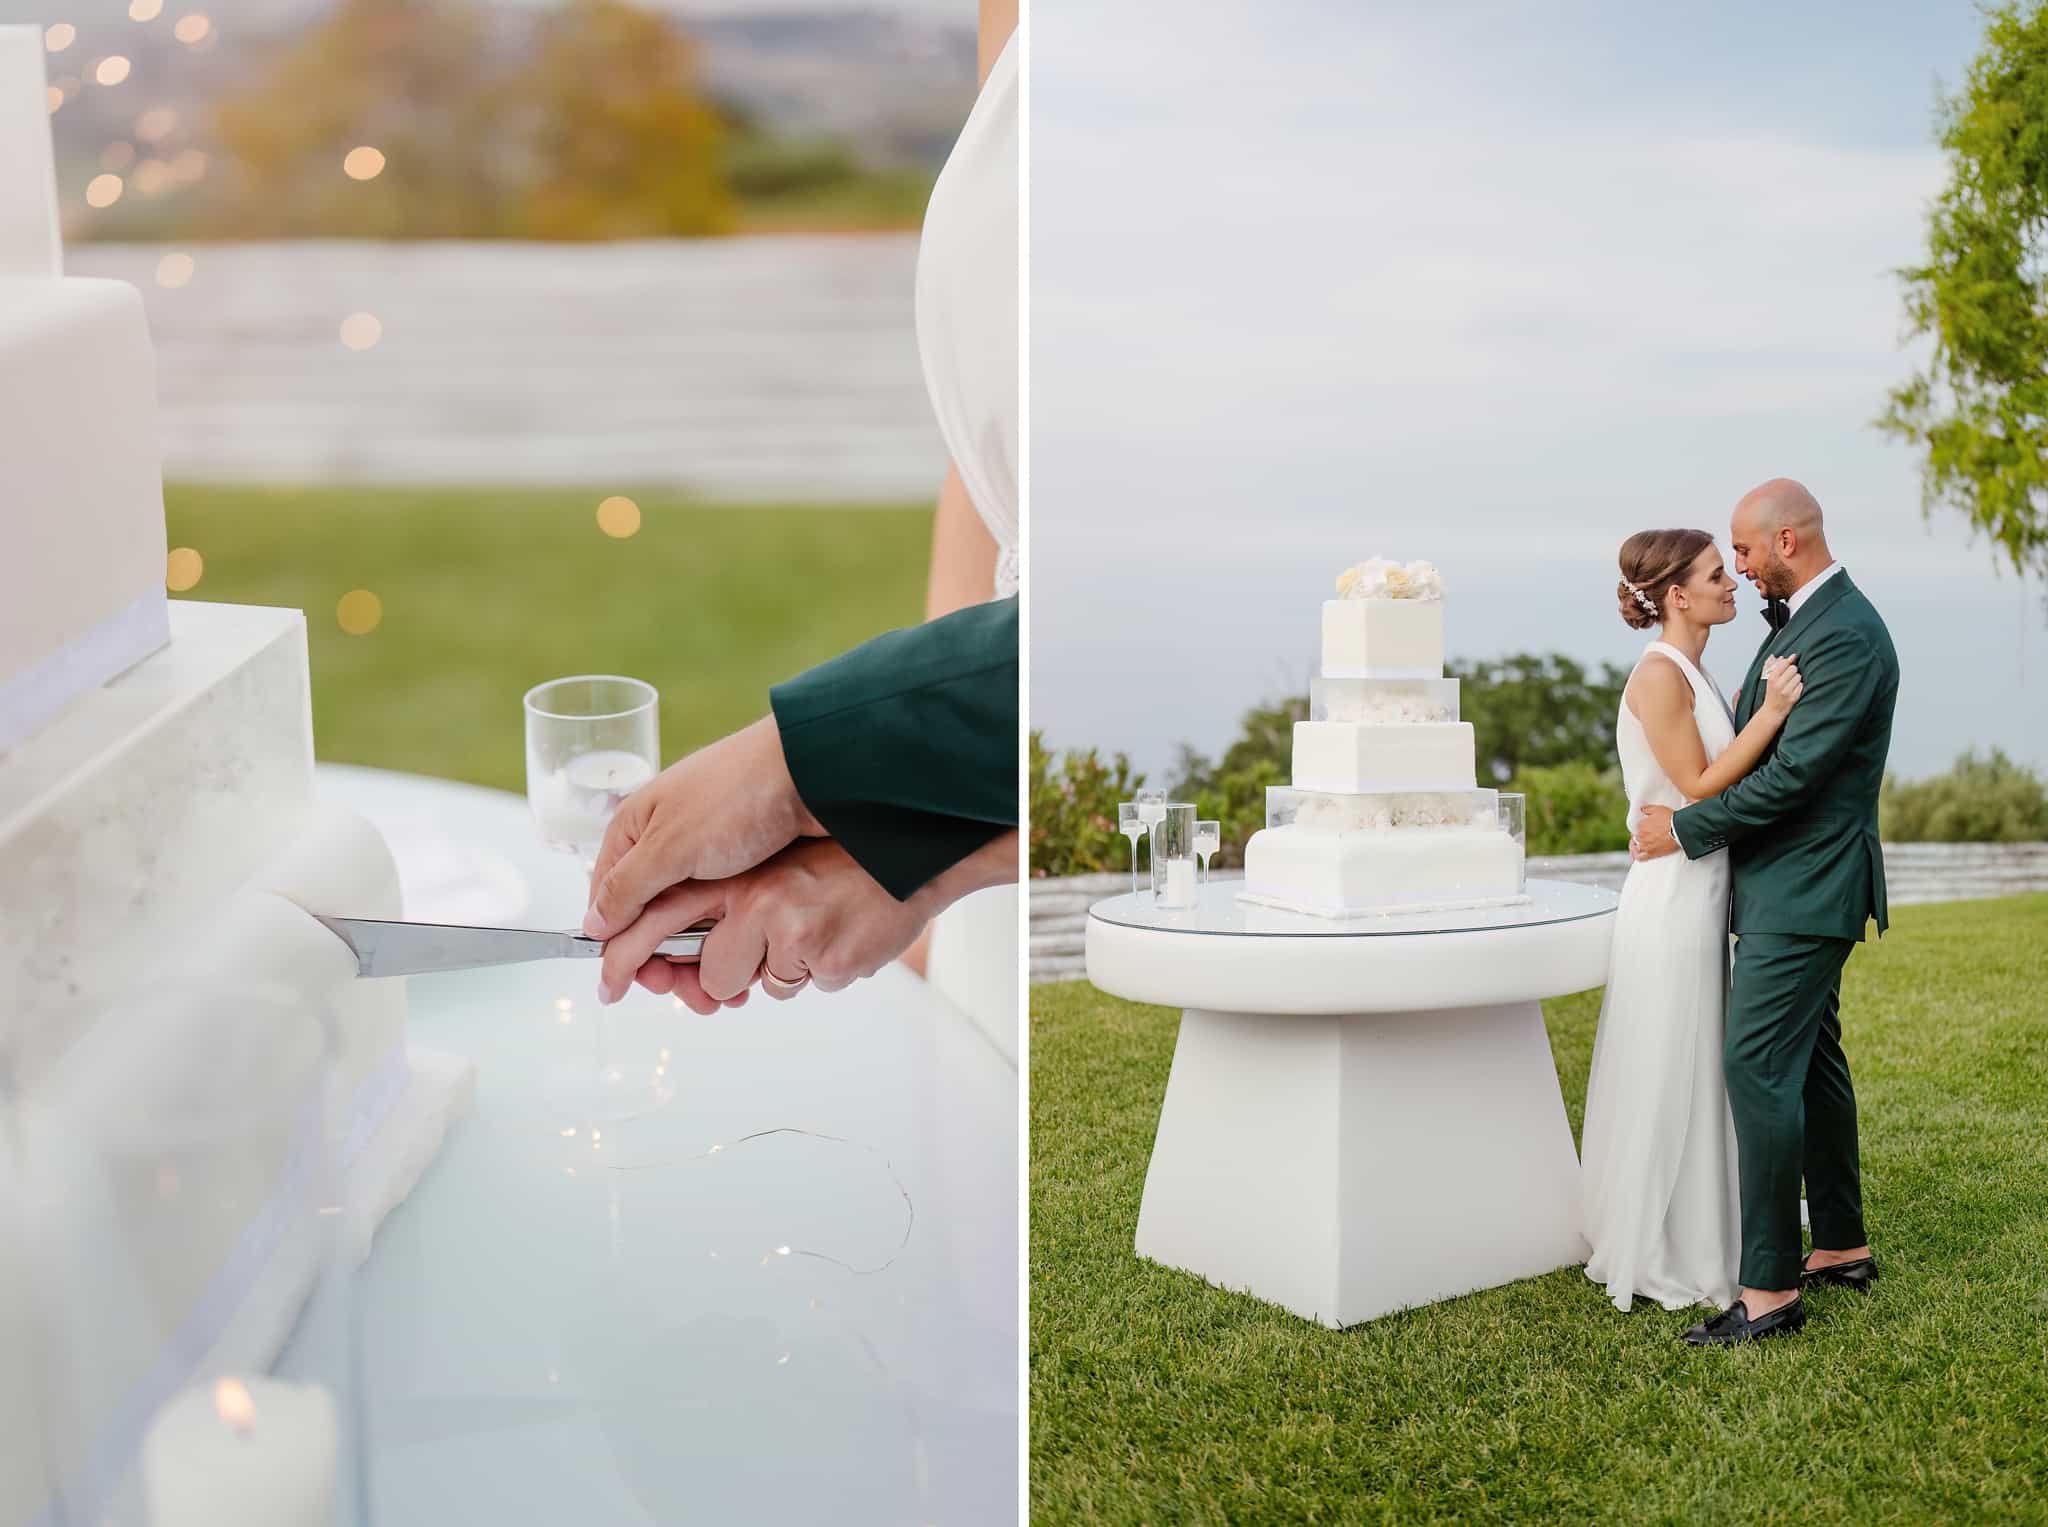 taglio-torta-nuziale-tramonto-wedding-cake-sposi-fotografo-matrimonio-pagus-montepagano-abruzzo